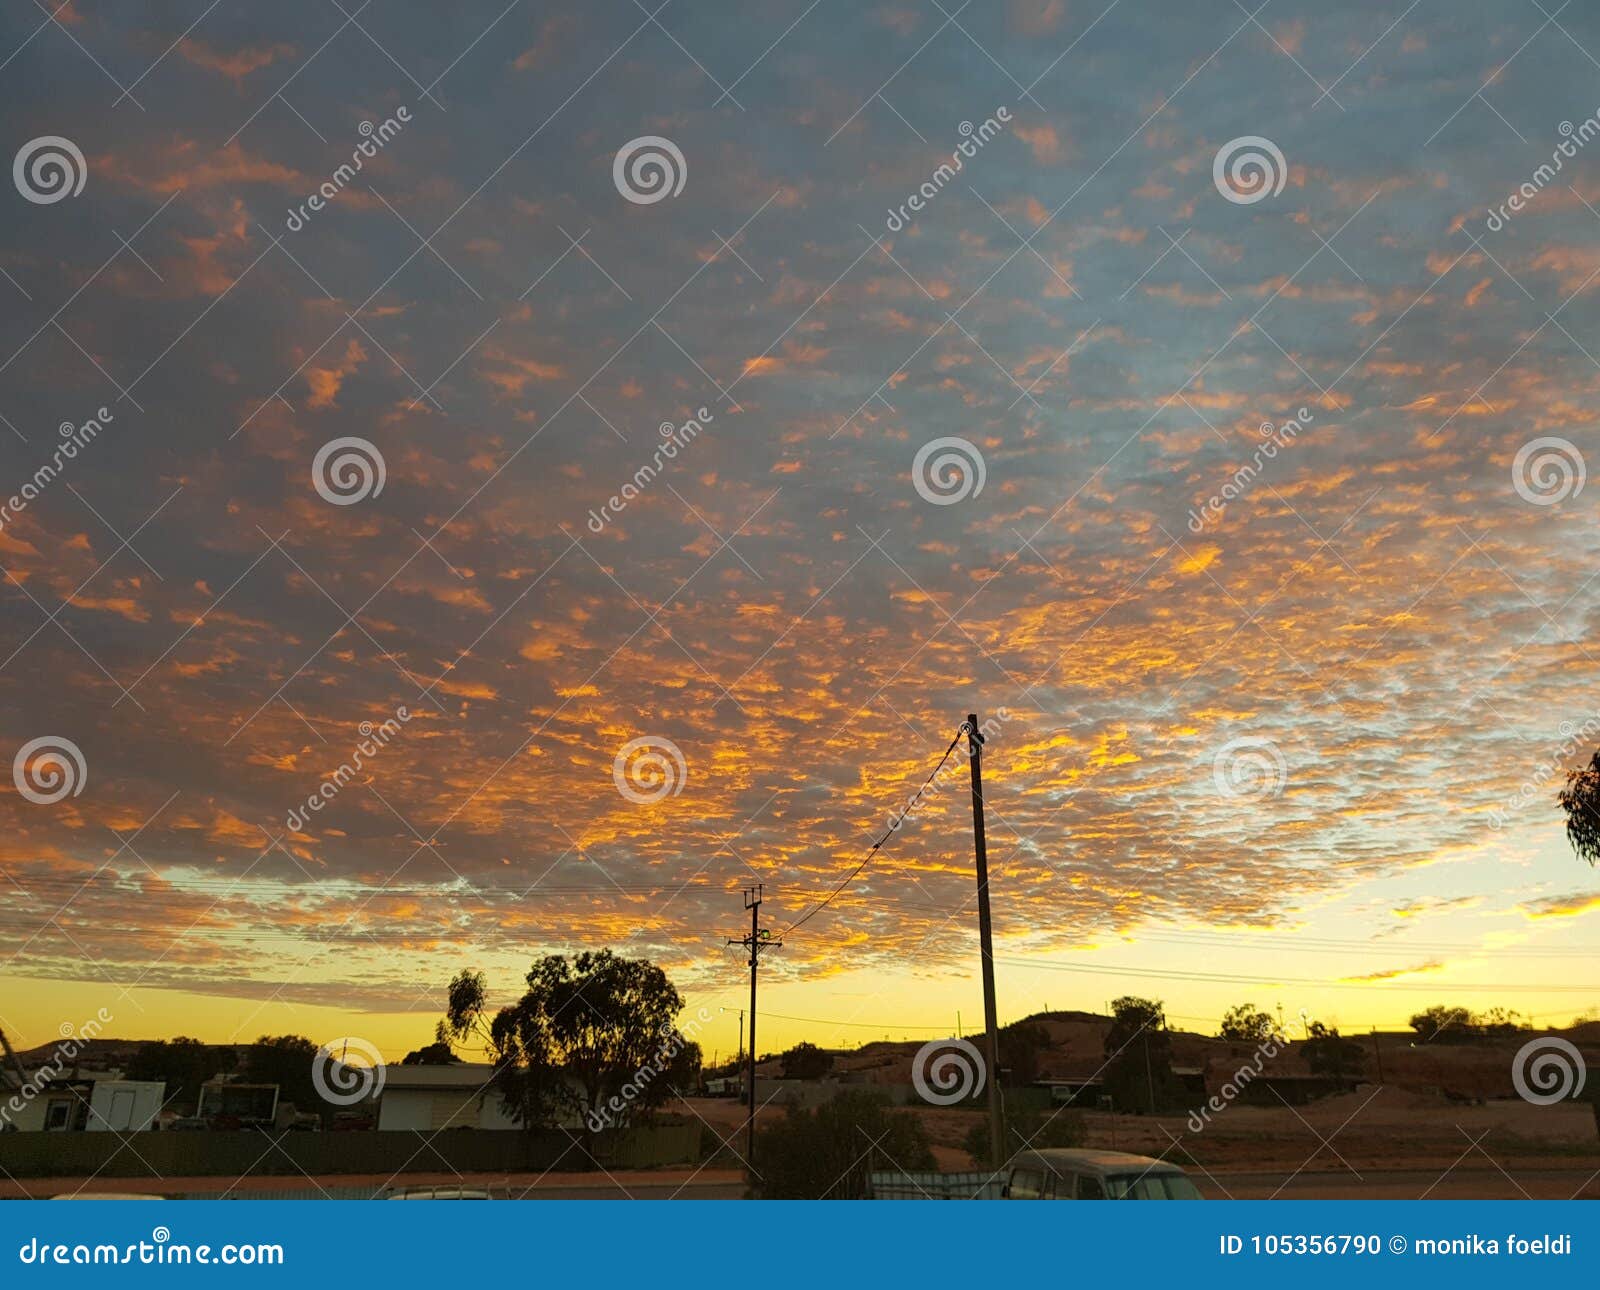 coober pedy south australia sunrise the outback natural colours